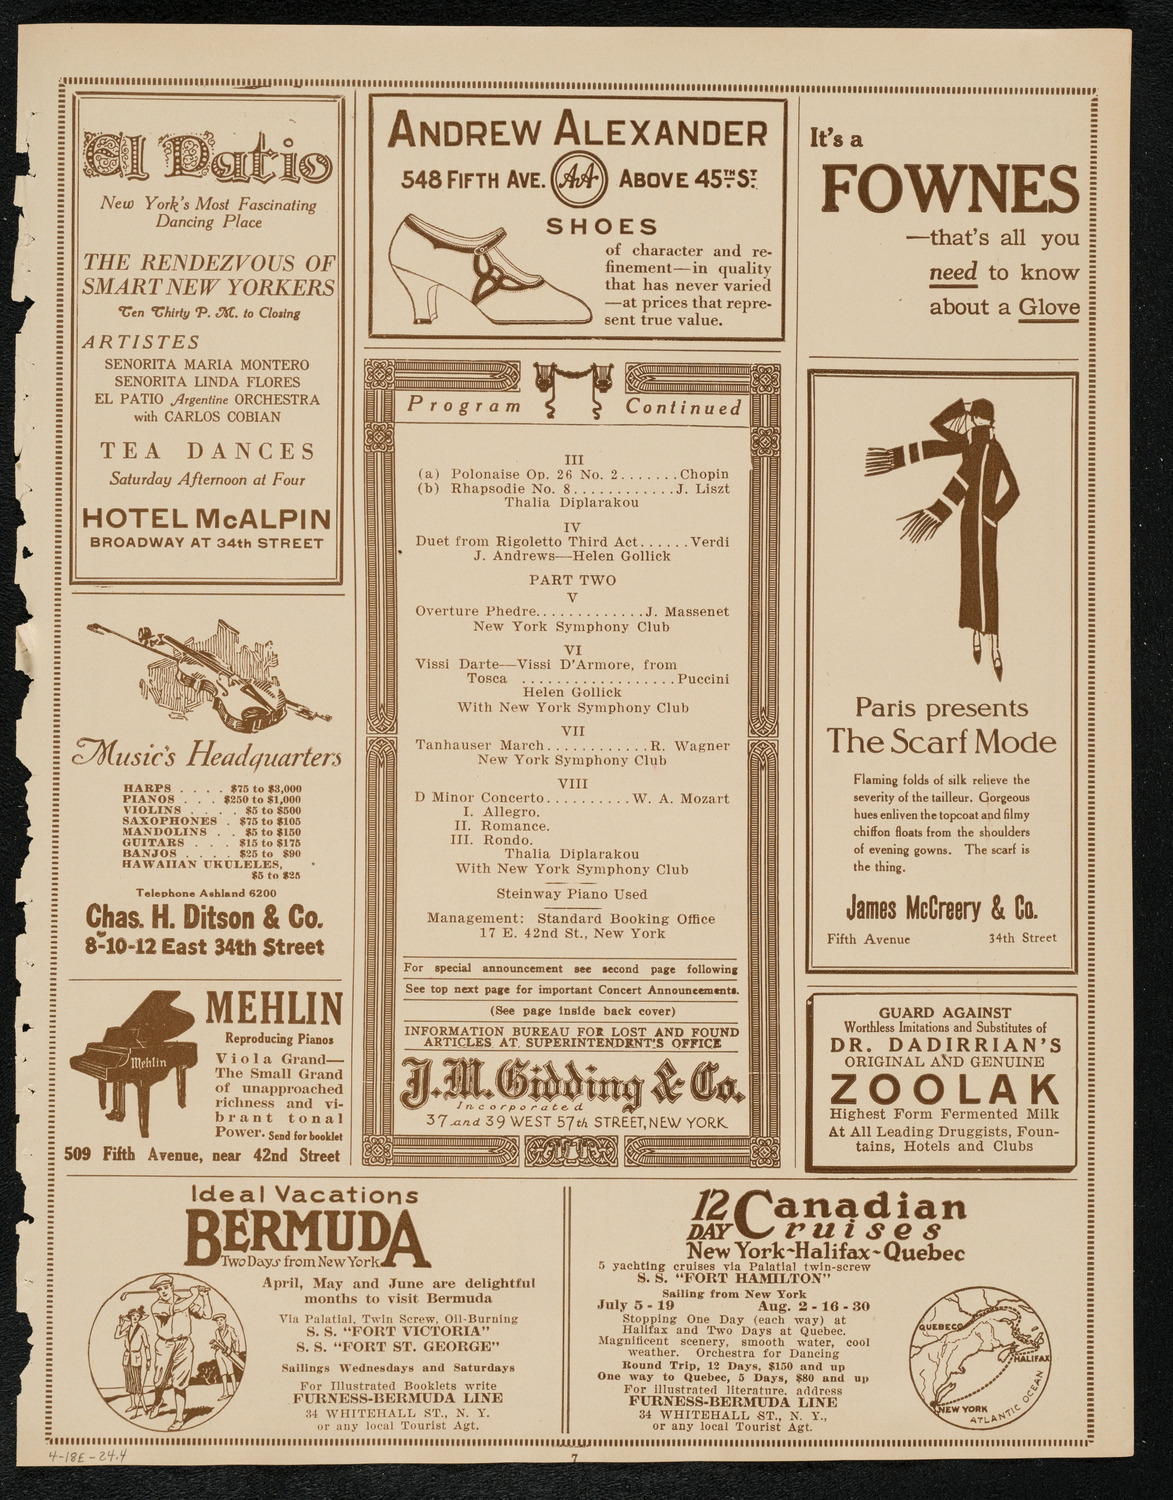 New York Symphony Club, April 18, 1924, program page 7